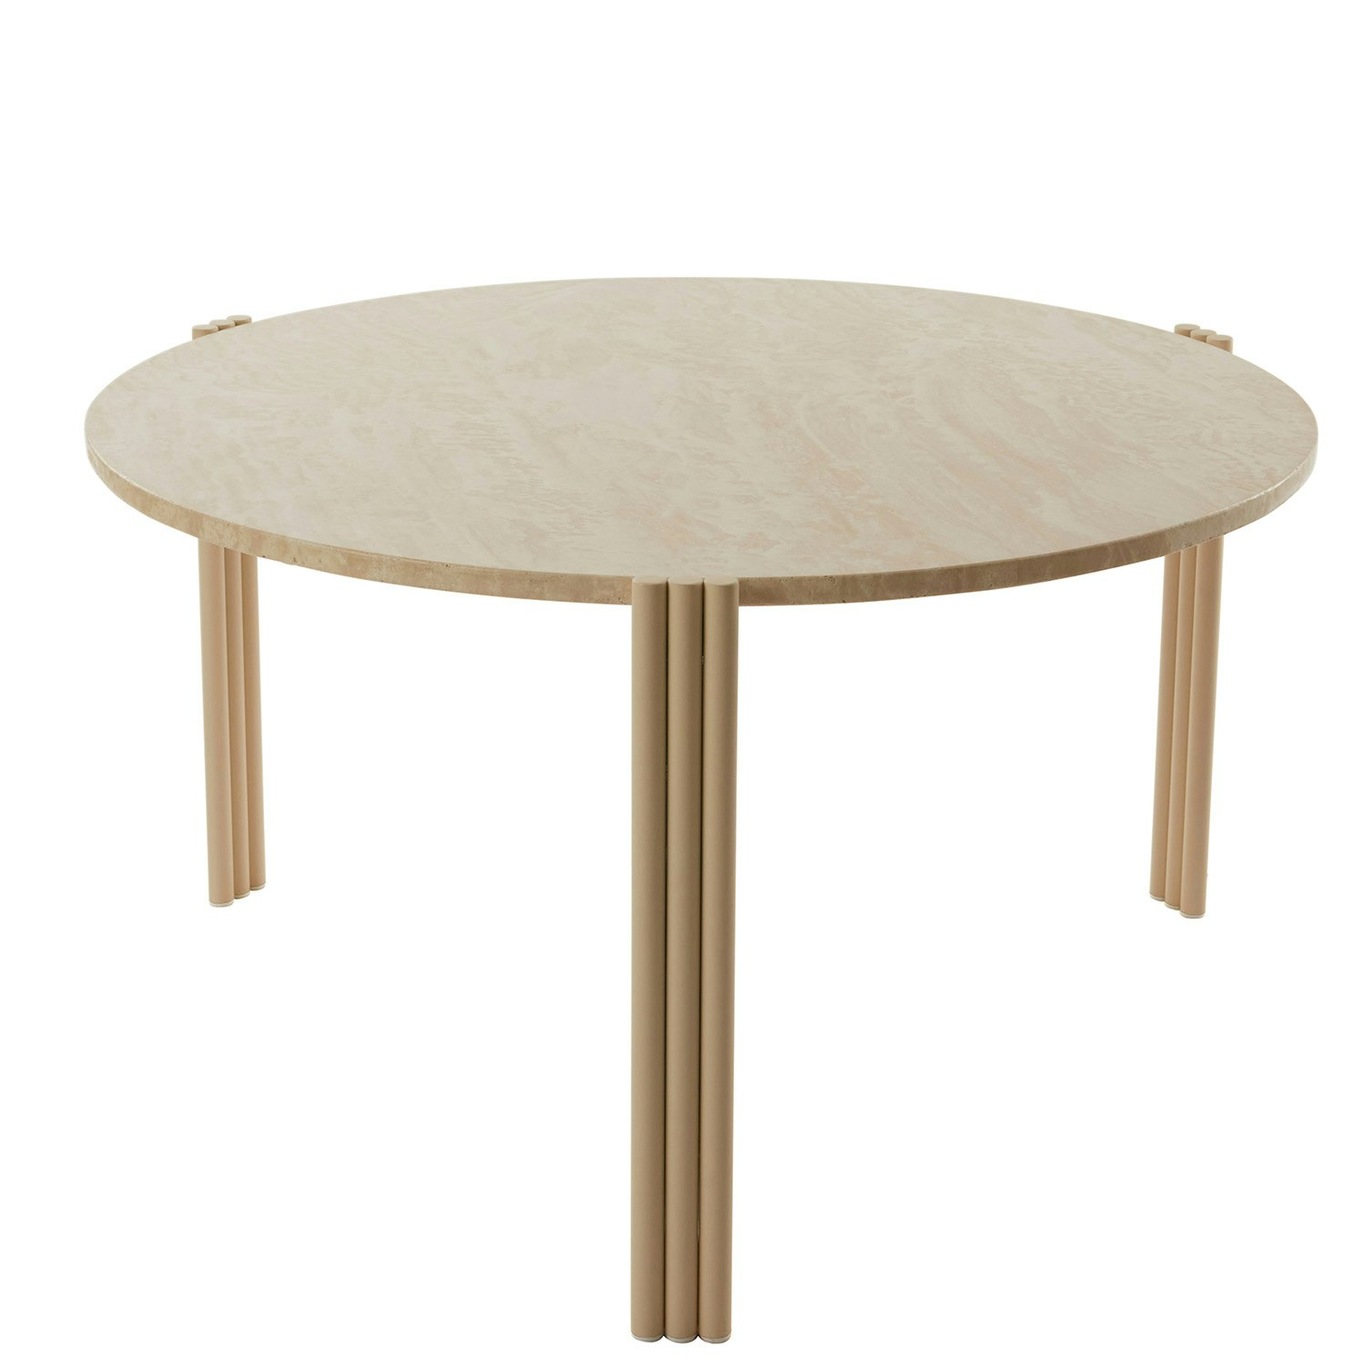 Tribus Coffee Table, Made of steel 80 cm, Sand/Travertine